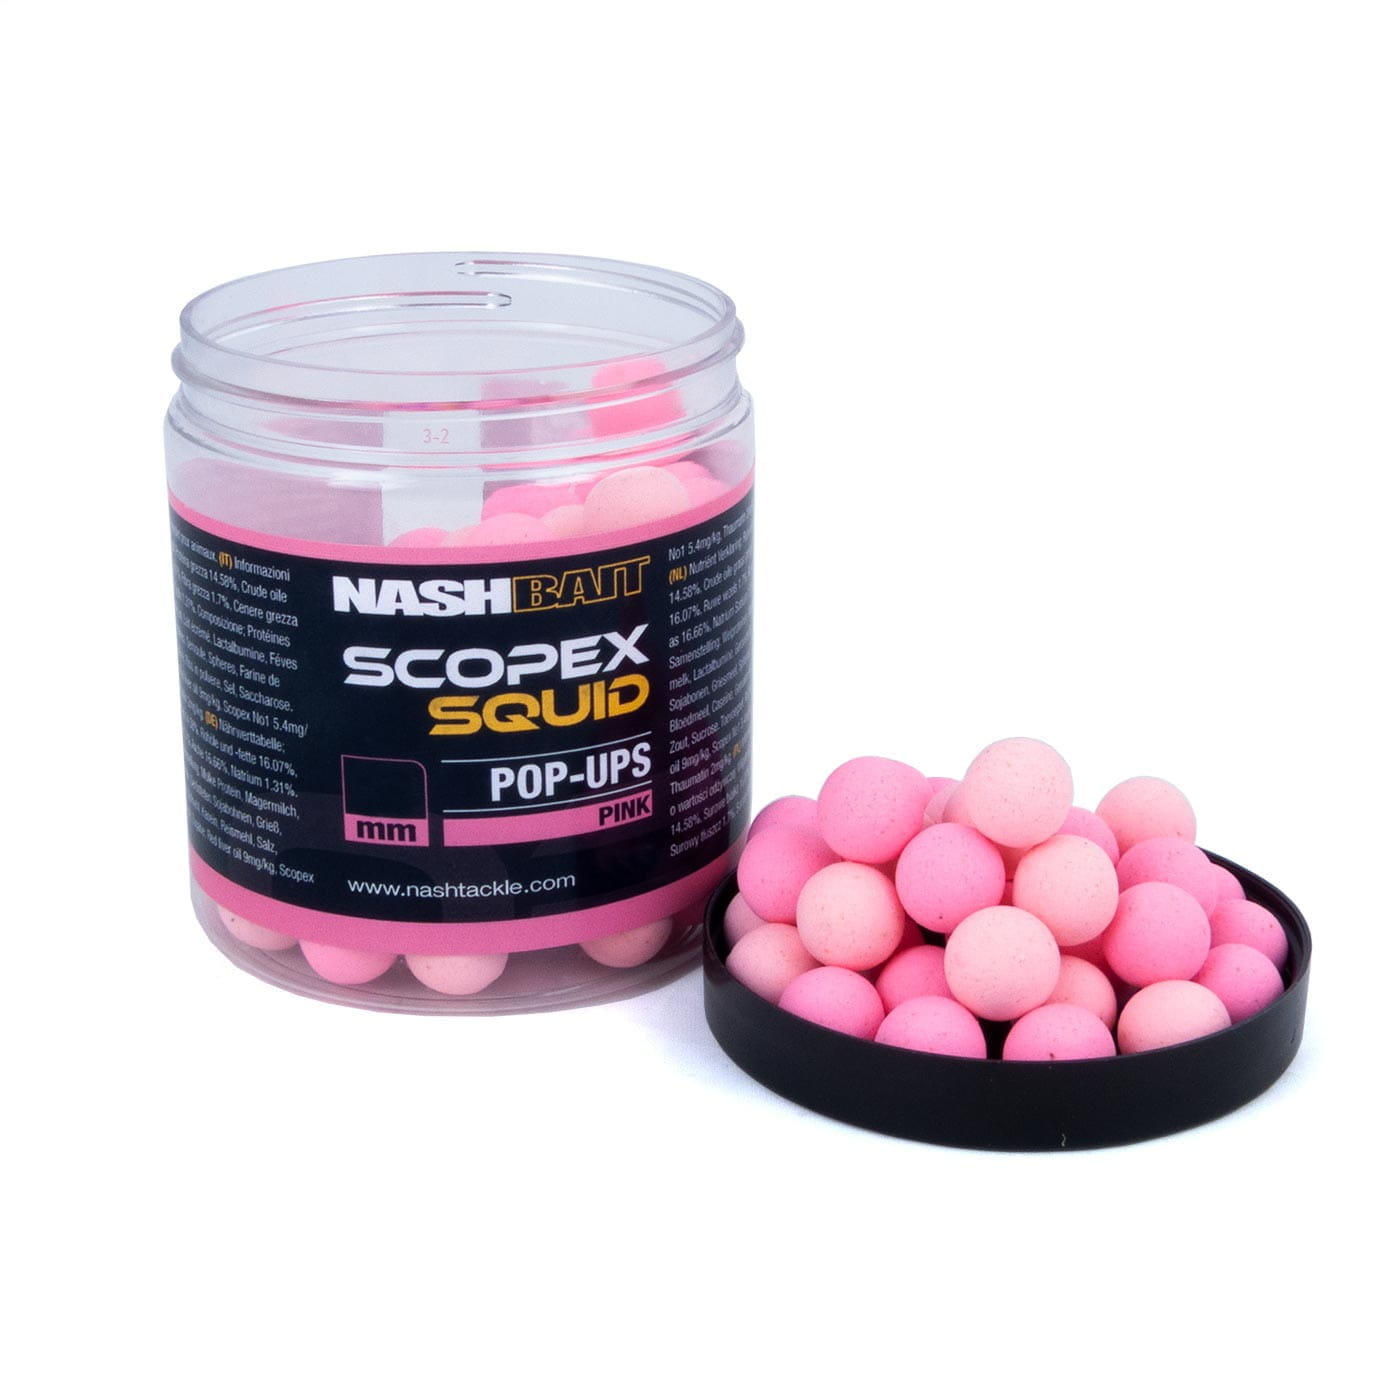 Scopex Squid - Pop-ups - Pink